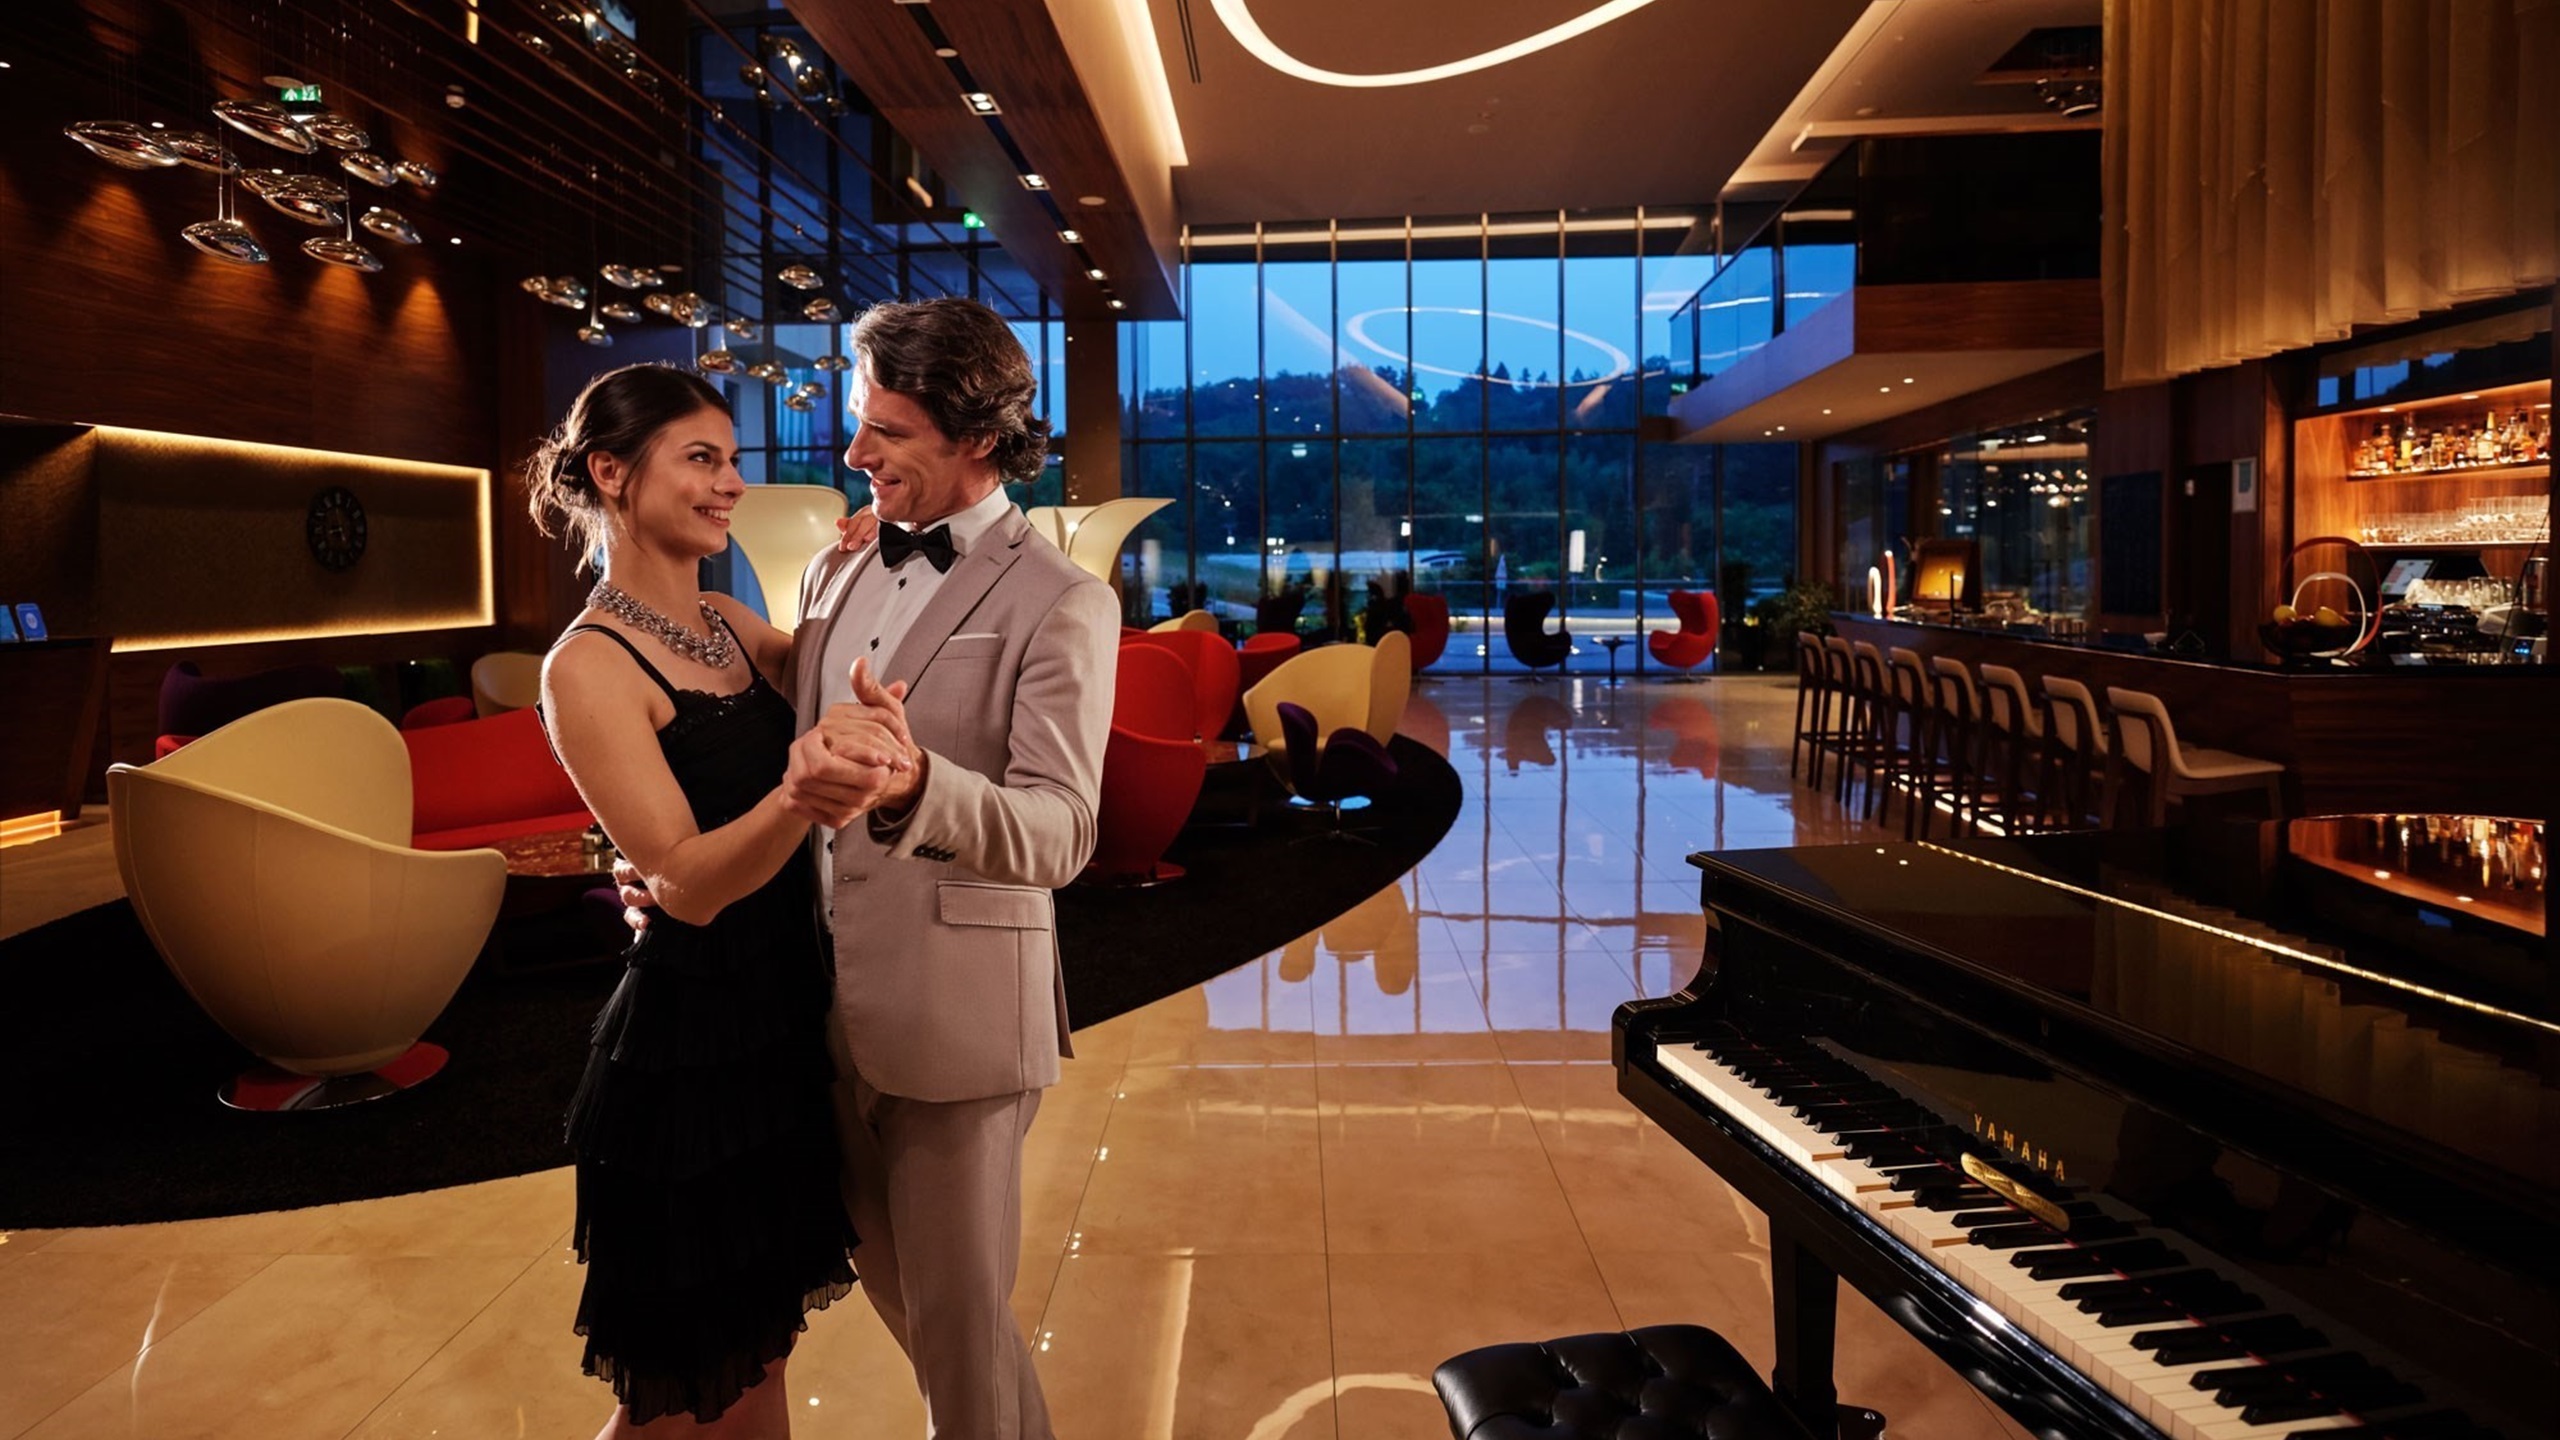 the couple dances at the Atlantida Hotel